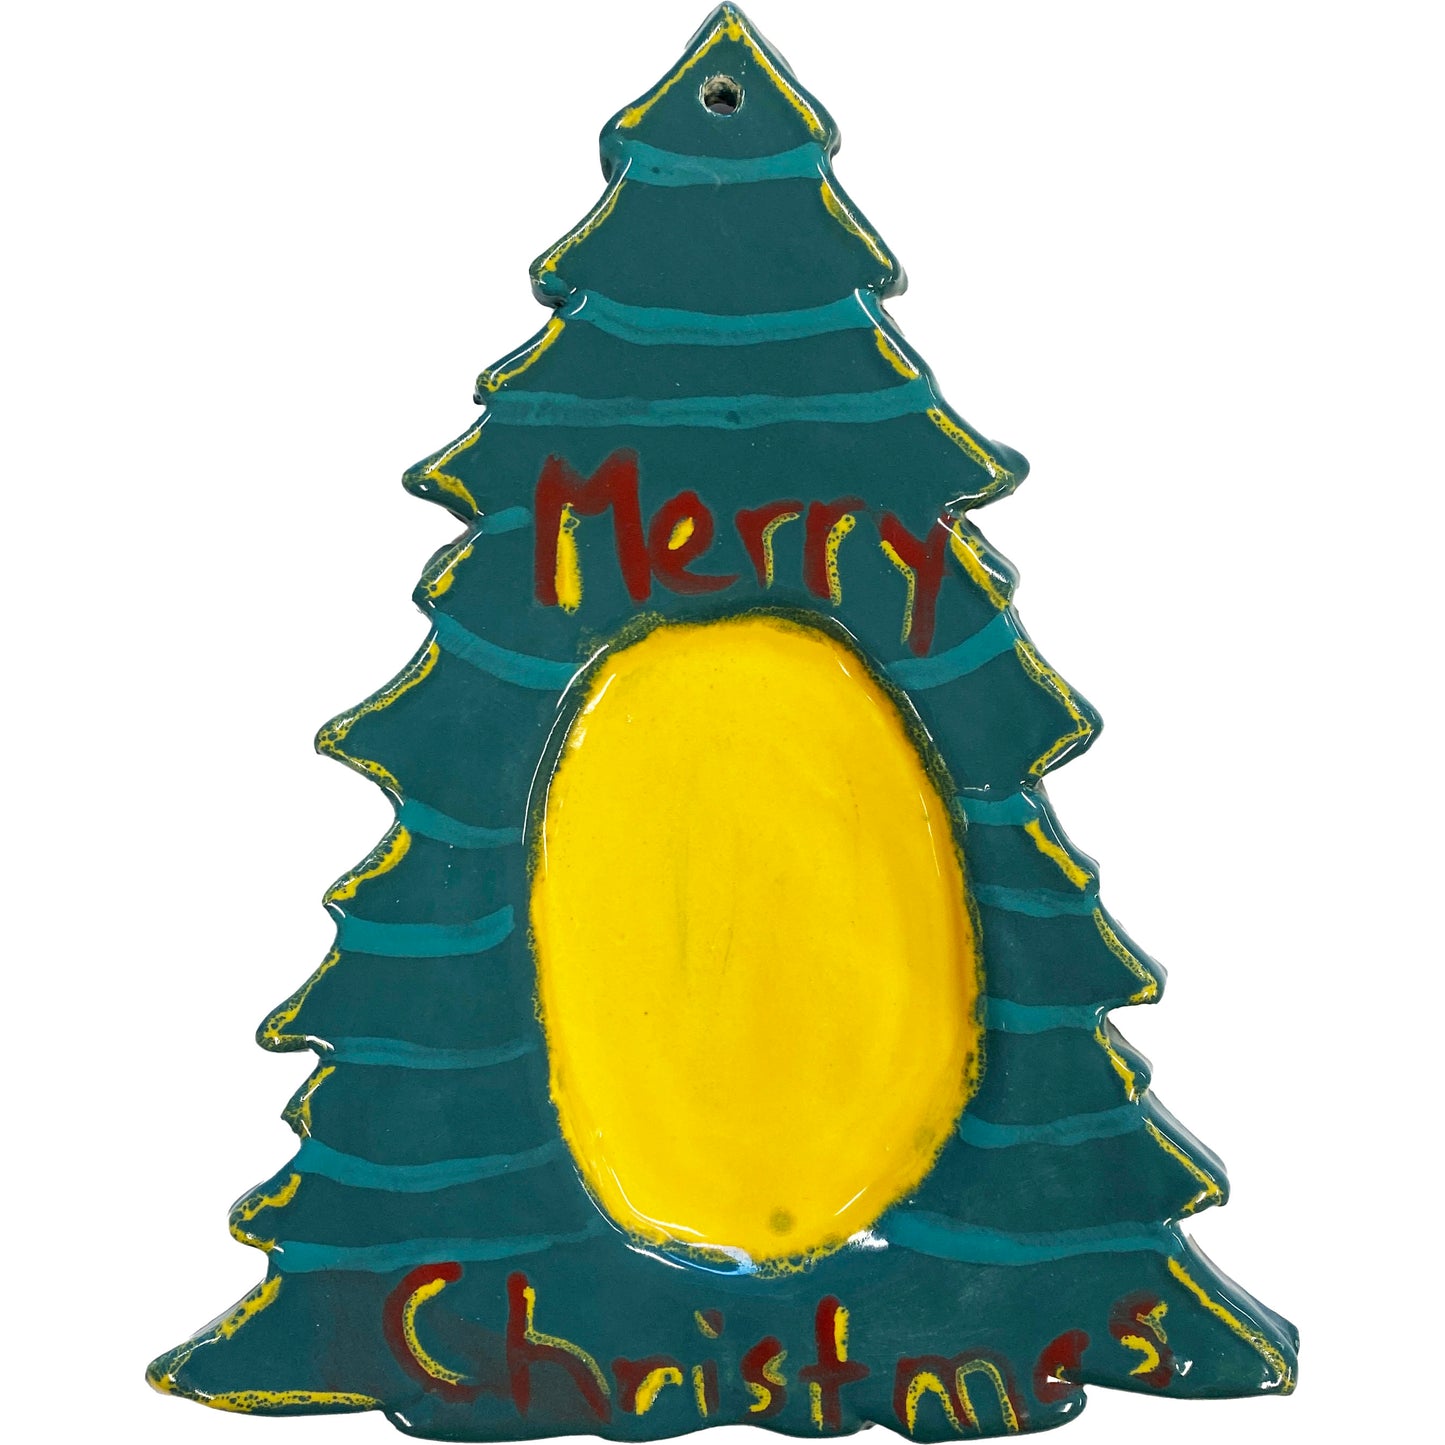 Ceramic Arts Handmade Clay Crafts Glazed 8-inch x 6.5-inch Christmas Tree made by Lisa Uptain